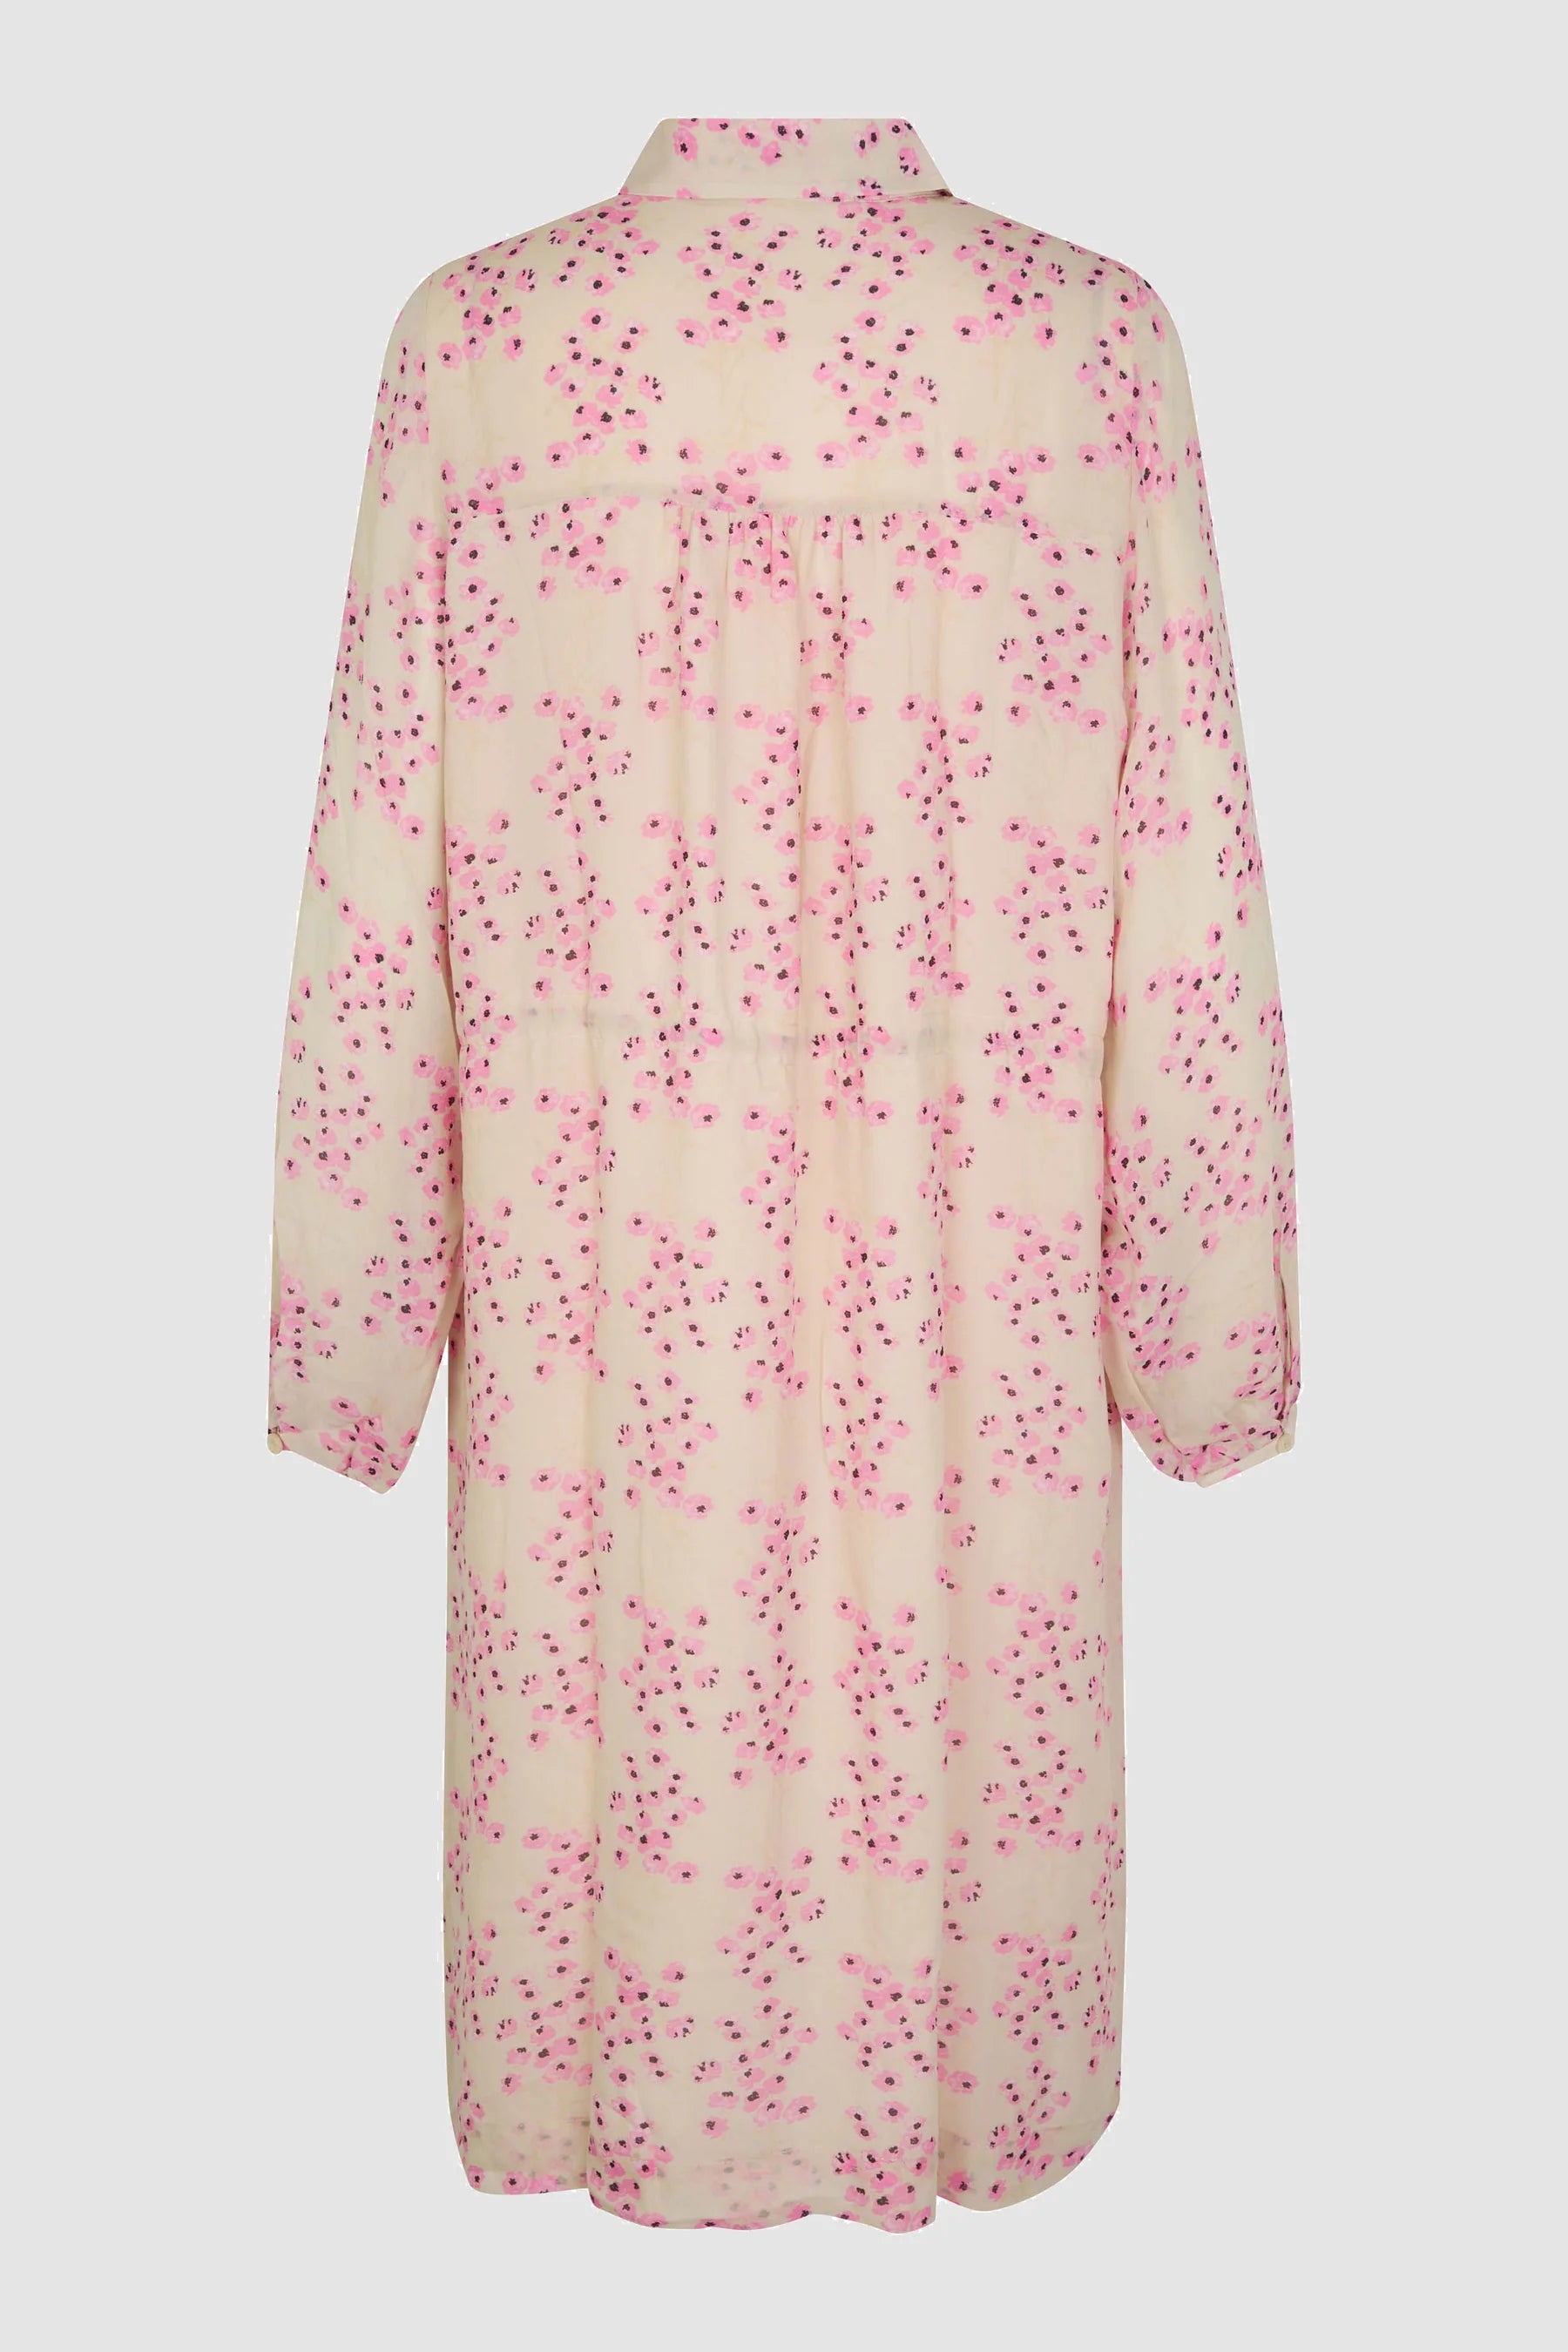 Ciloa Dress - Begonia Pink